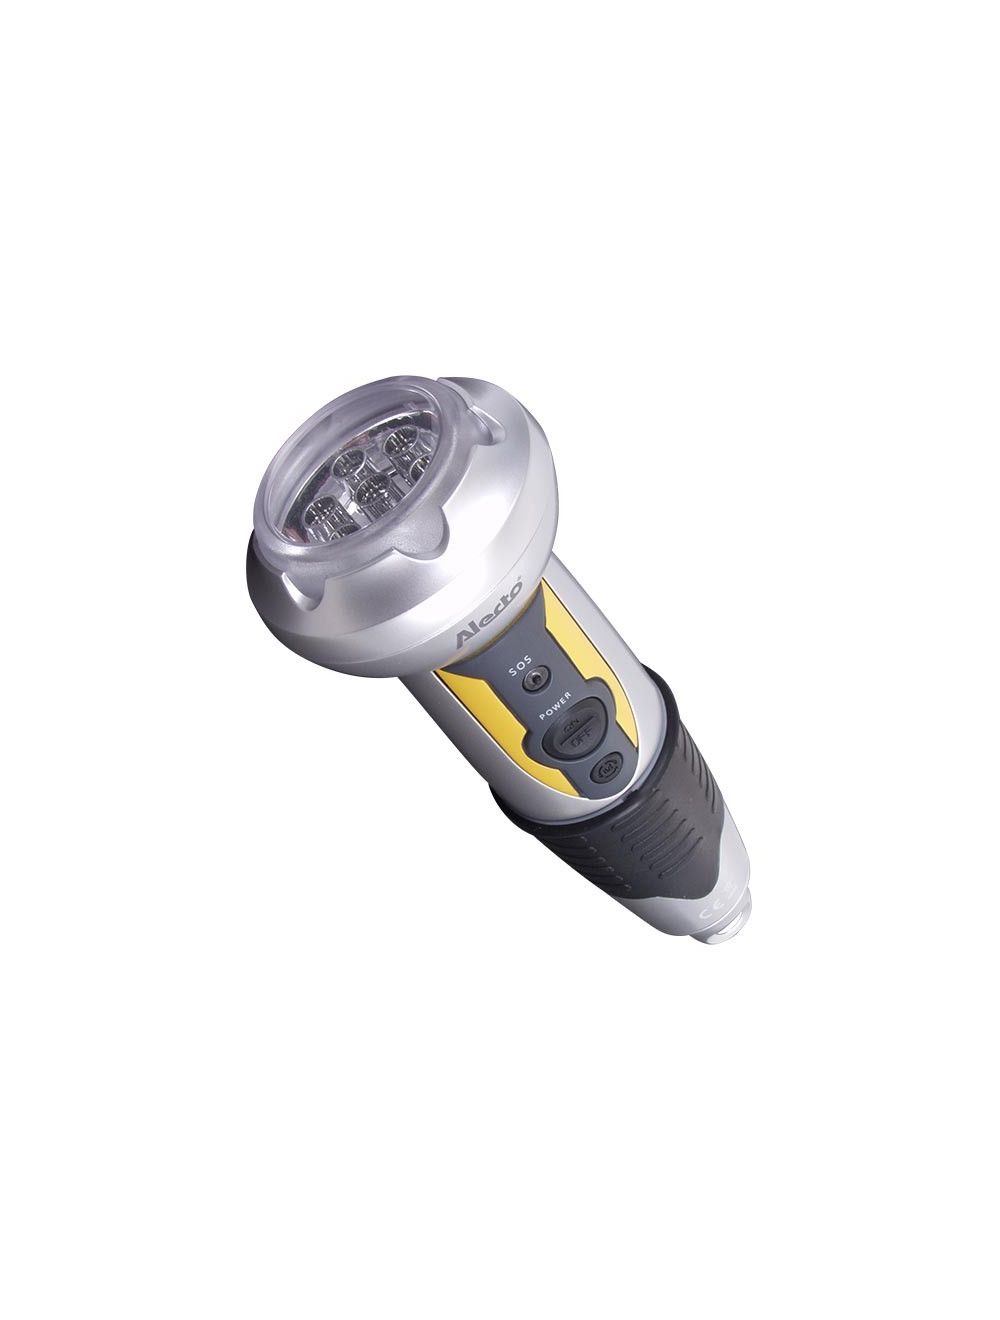 suspensie stereo Bully Alecto LED zaklamp ATL-240 | Brandblussershop